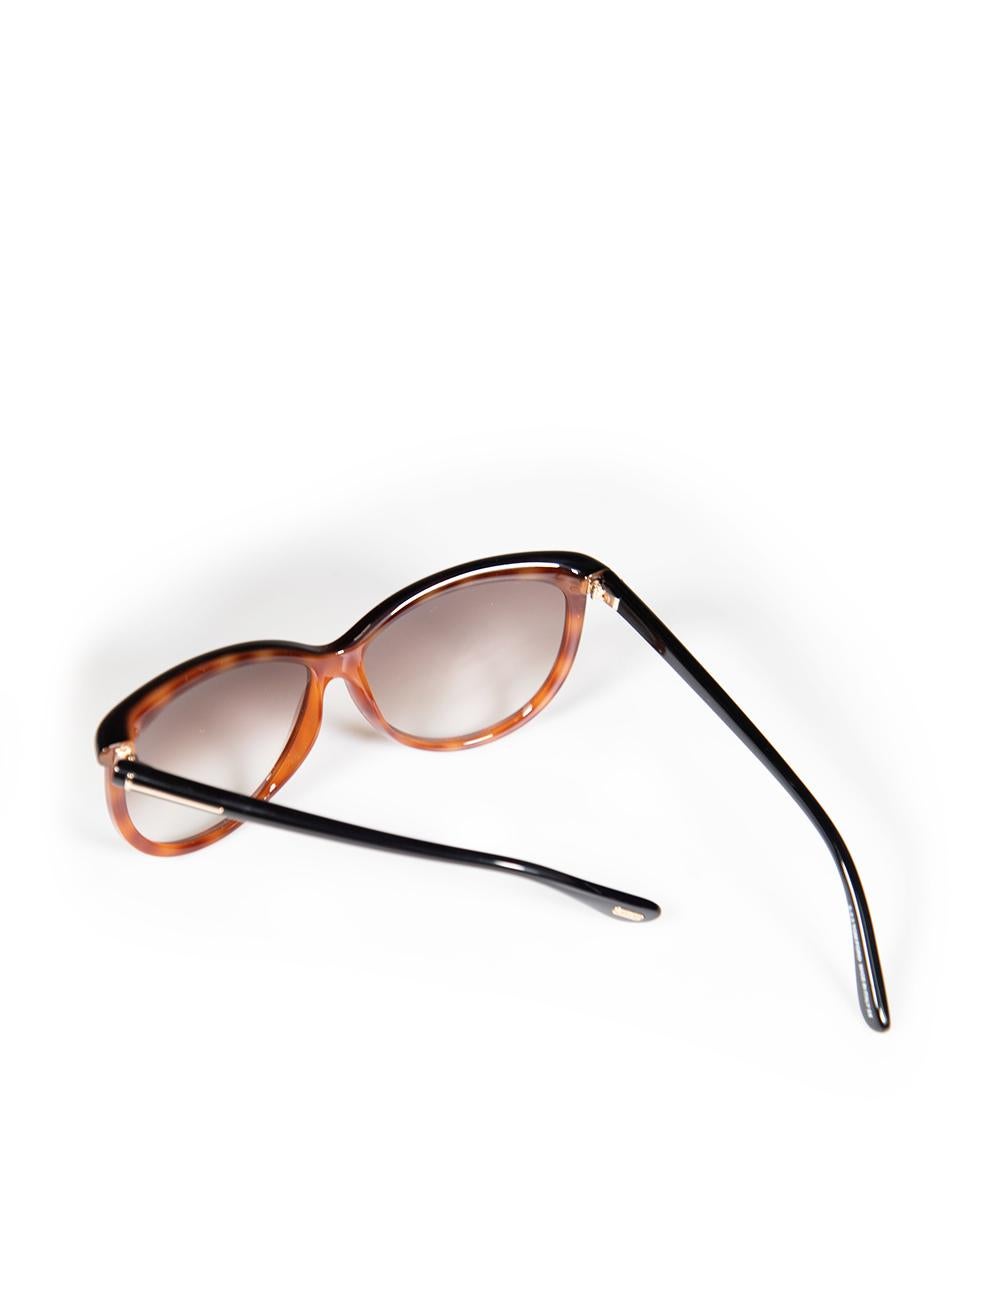 Tom Ford Black Havana Josephine Sunglasses For Sale 3